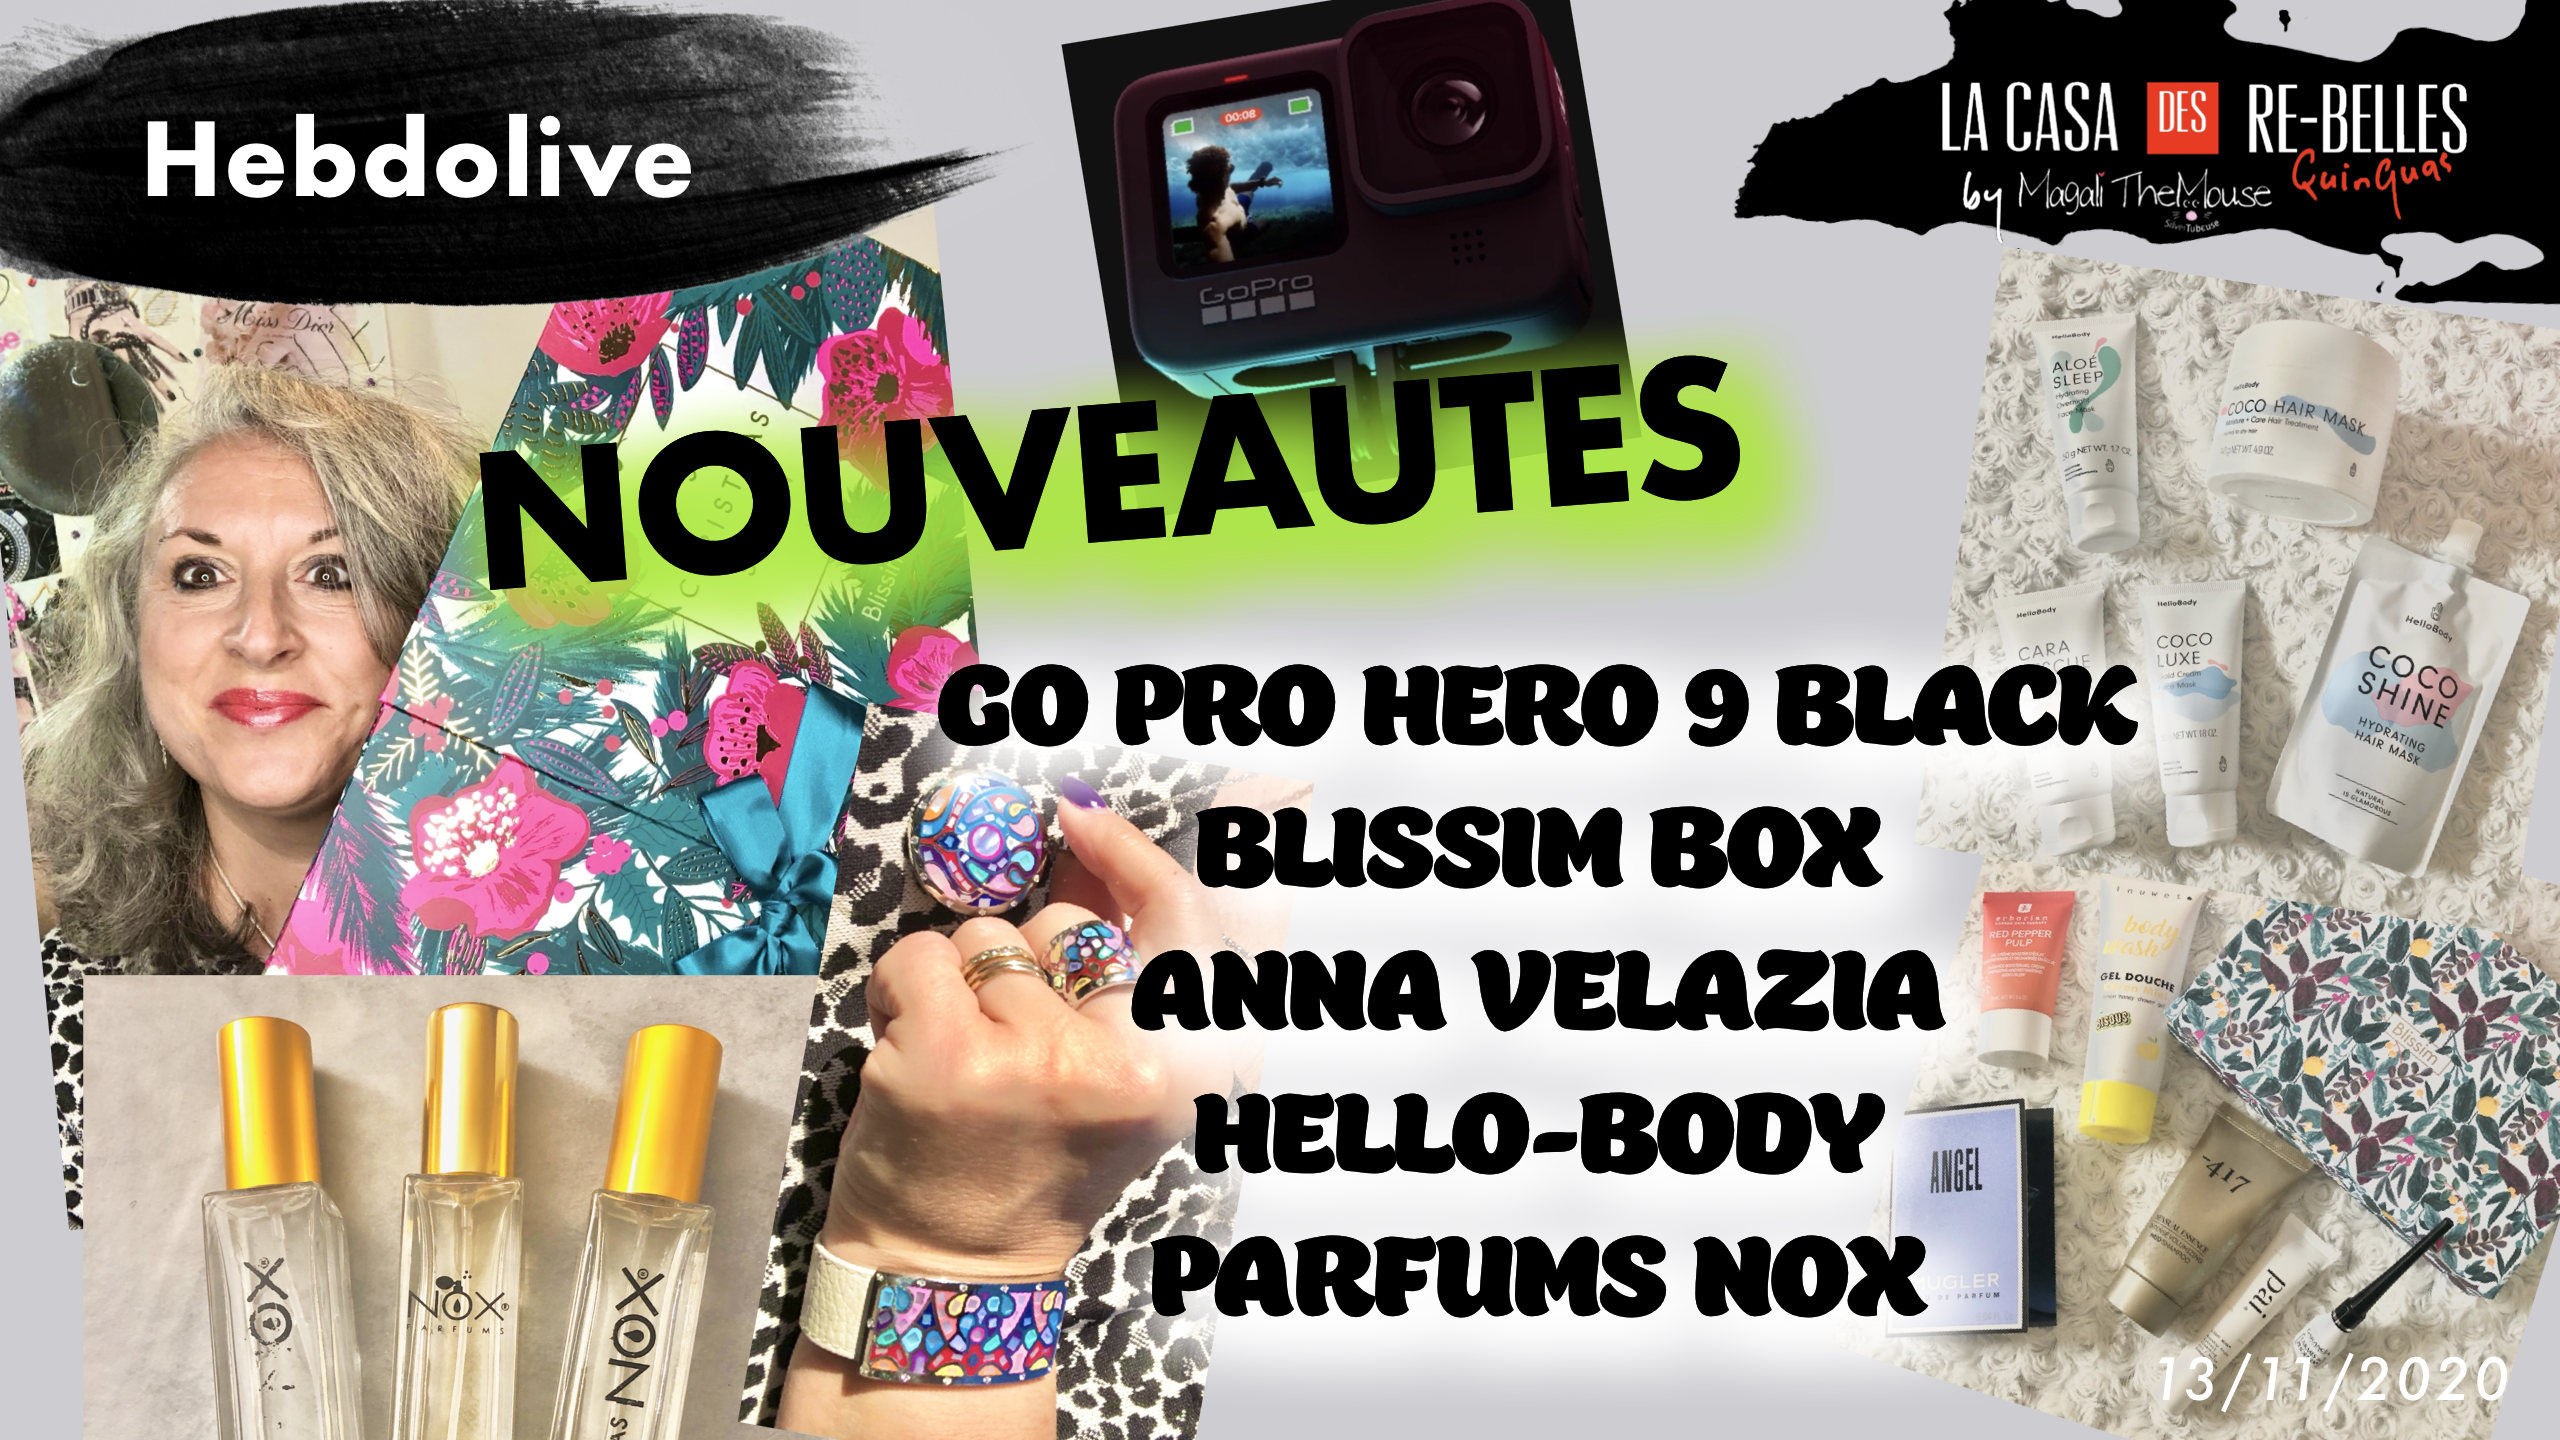 Nouveautés: GoPro hero 9 black, hello body, blissim box, Anna Velazia